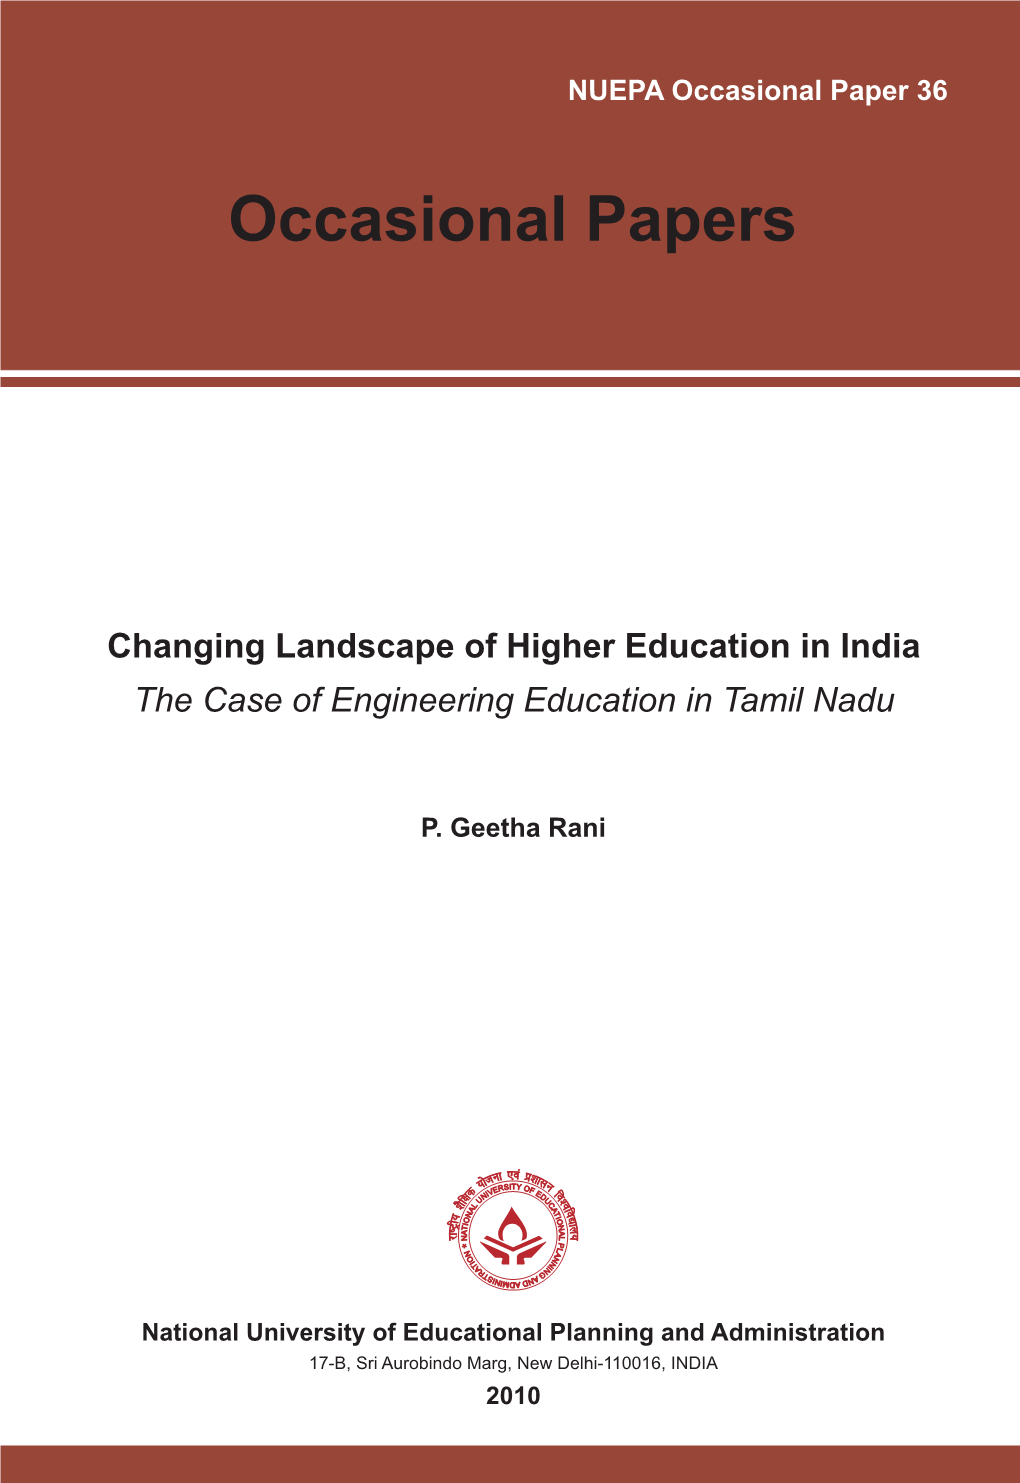 Framework of the Paper on Higher Education in Tamil Nadu